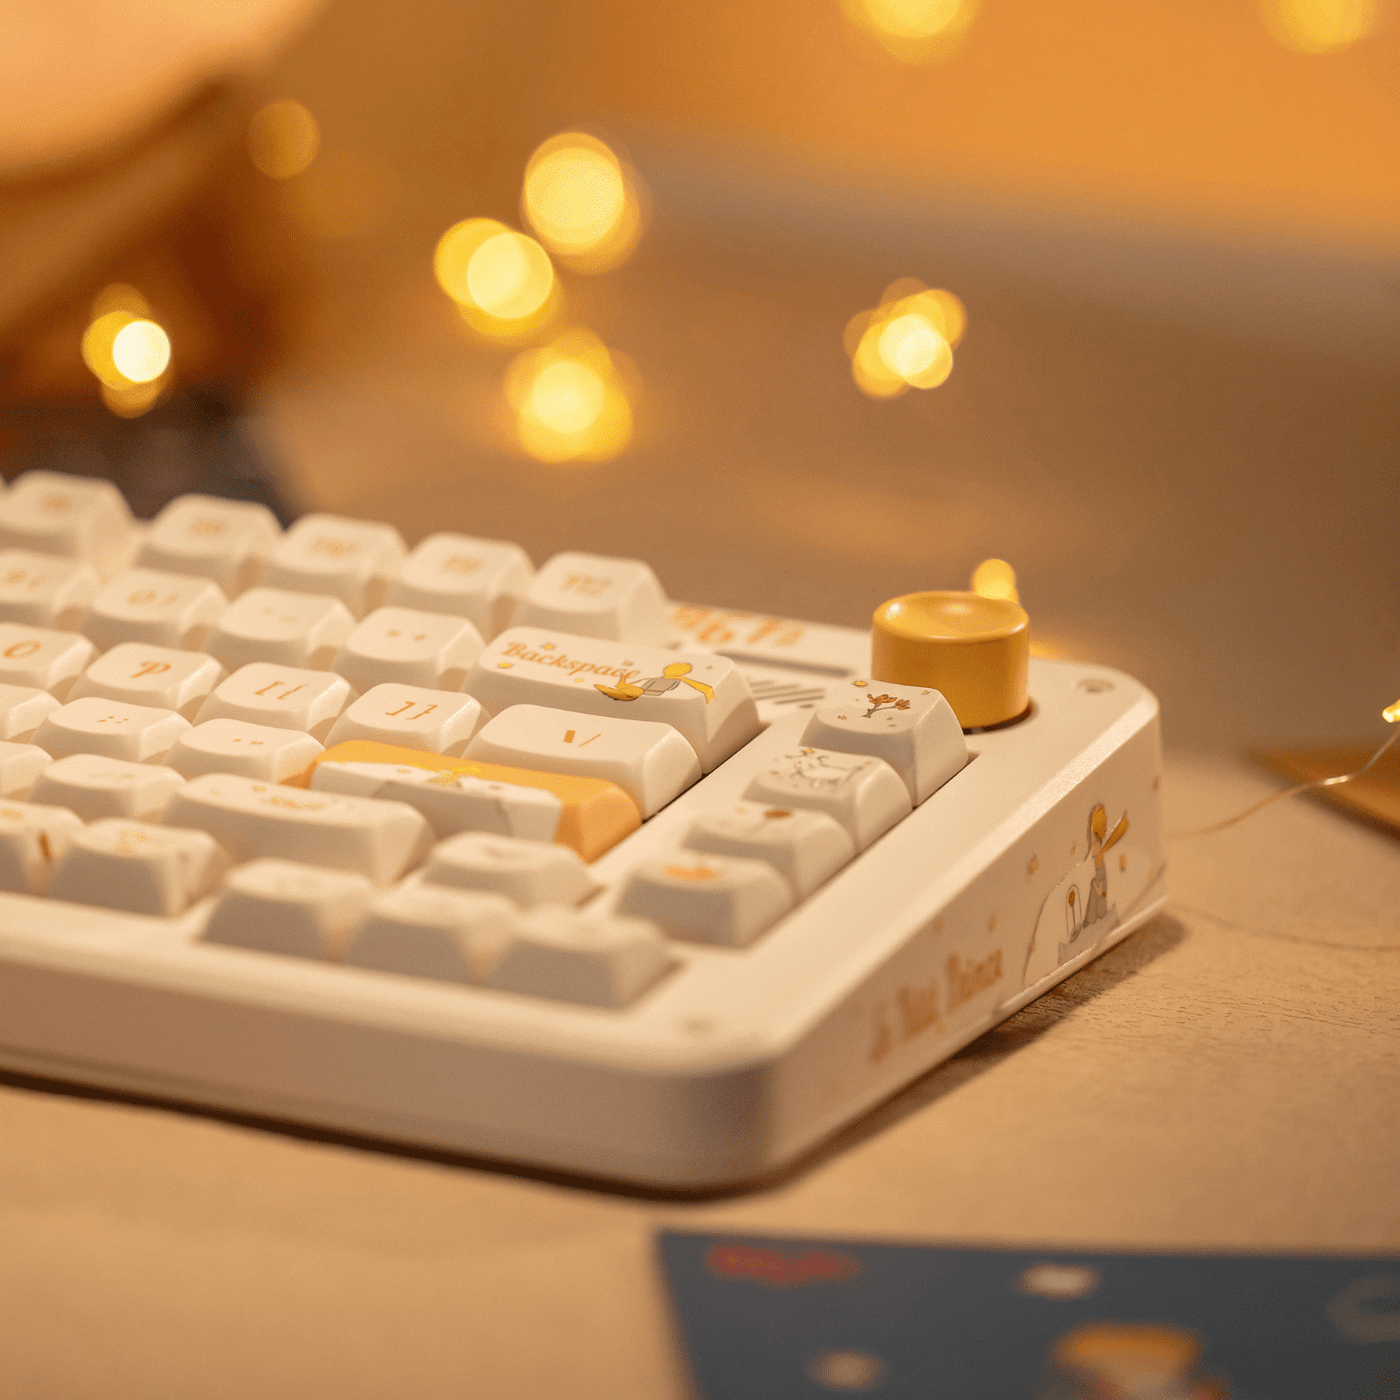 IQUNIX x Little Prince ZX75 Sunset Ponder Mechanical Keyboard